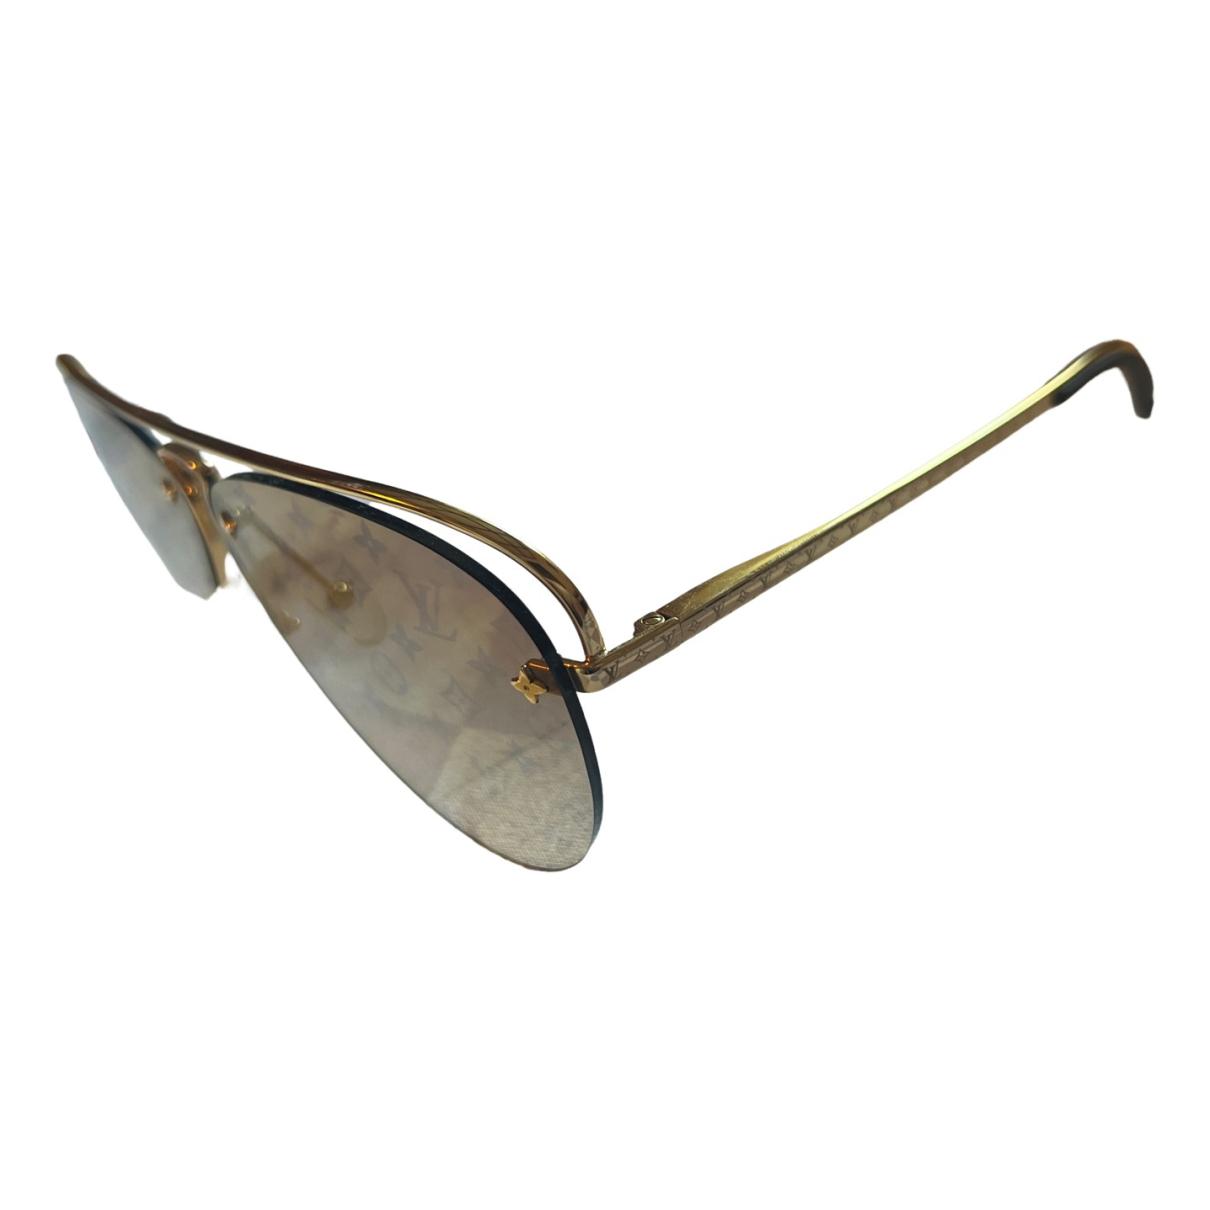 Drive aviator sunglasses Louis Vuitton Silver in Metal - 30140781